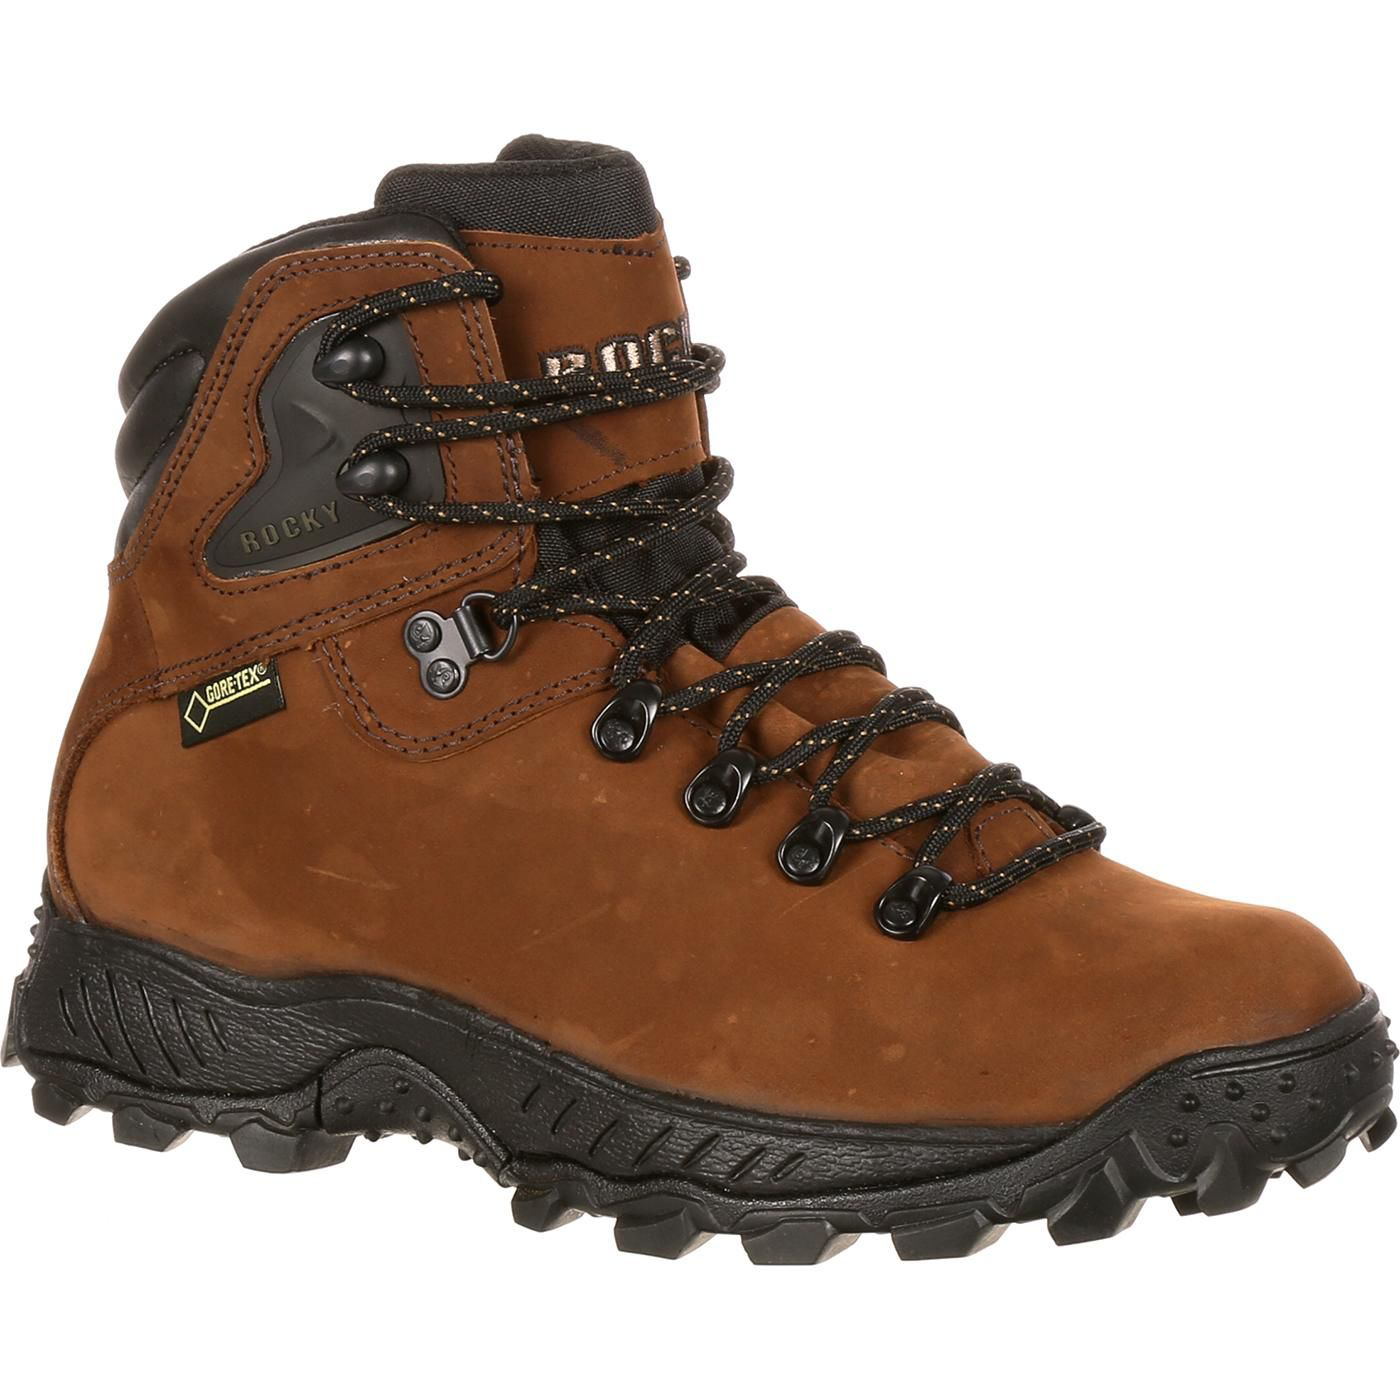 Rocky Ridgetop GORE-TEX 6"" Hiking Boots for Men - Brown - 12M